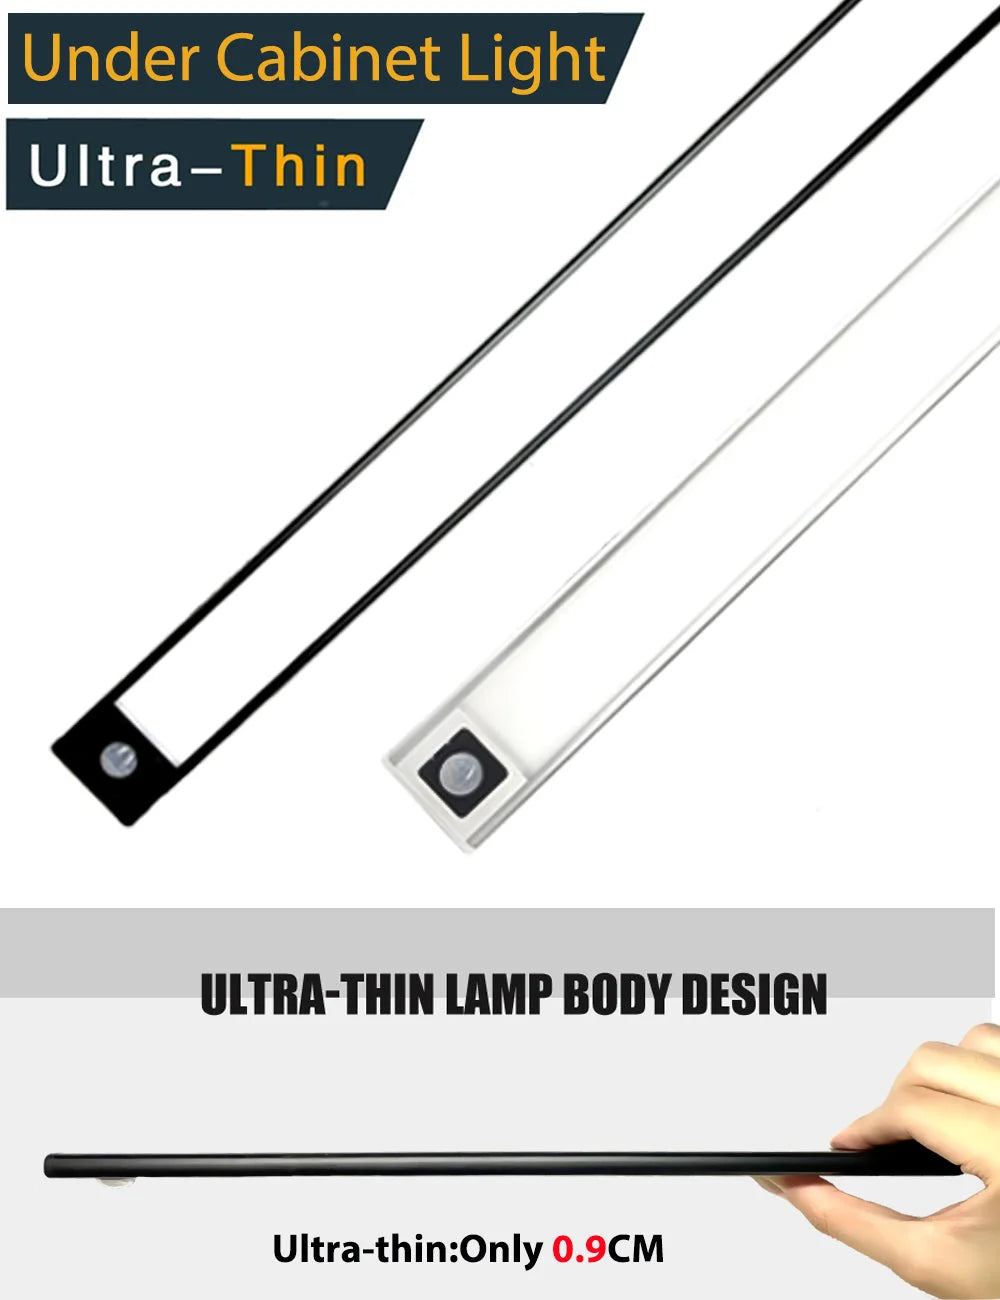 Ultra-thin Motion Sensor Night Lamp